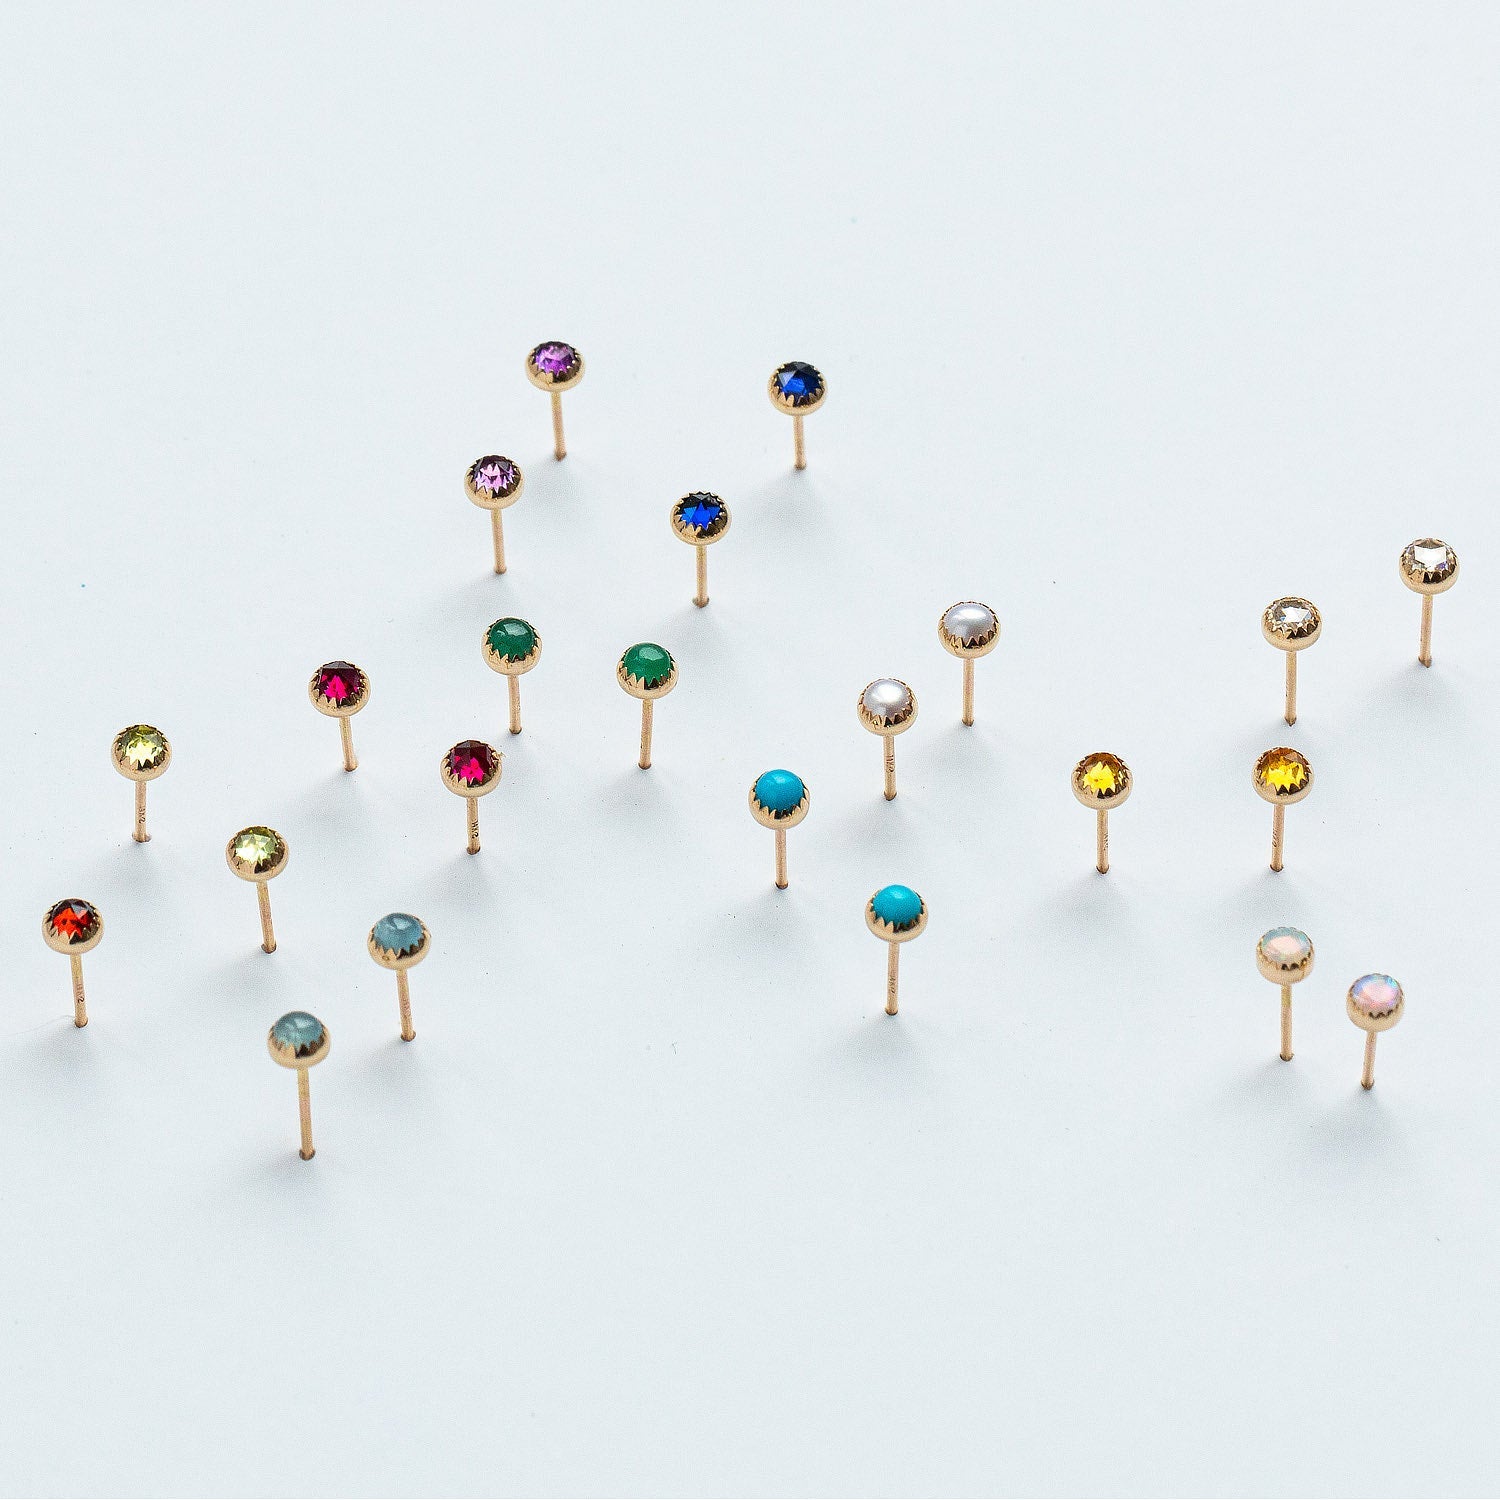 Aquamarine & gold stud earrings - Simone Walsh Jewellery Australia